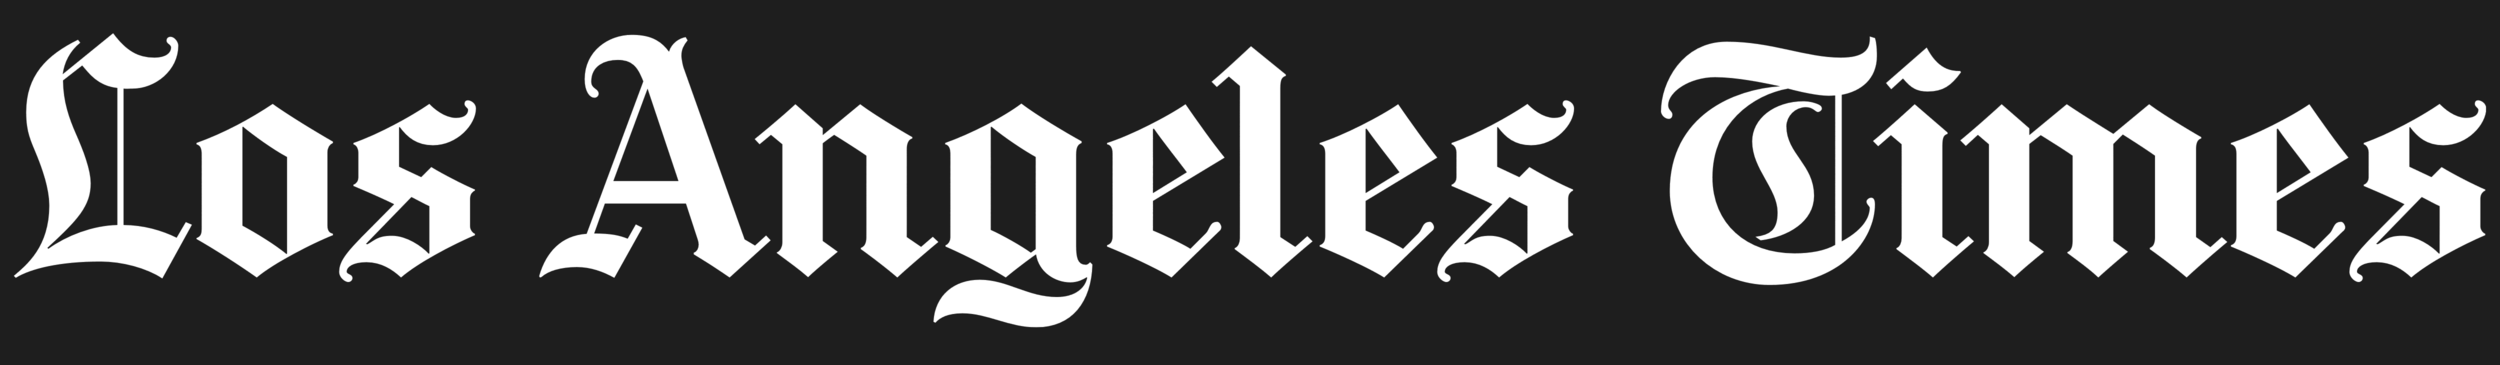 Los_Angeles_Times_logo_black.png